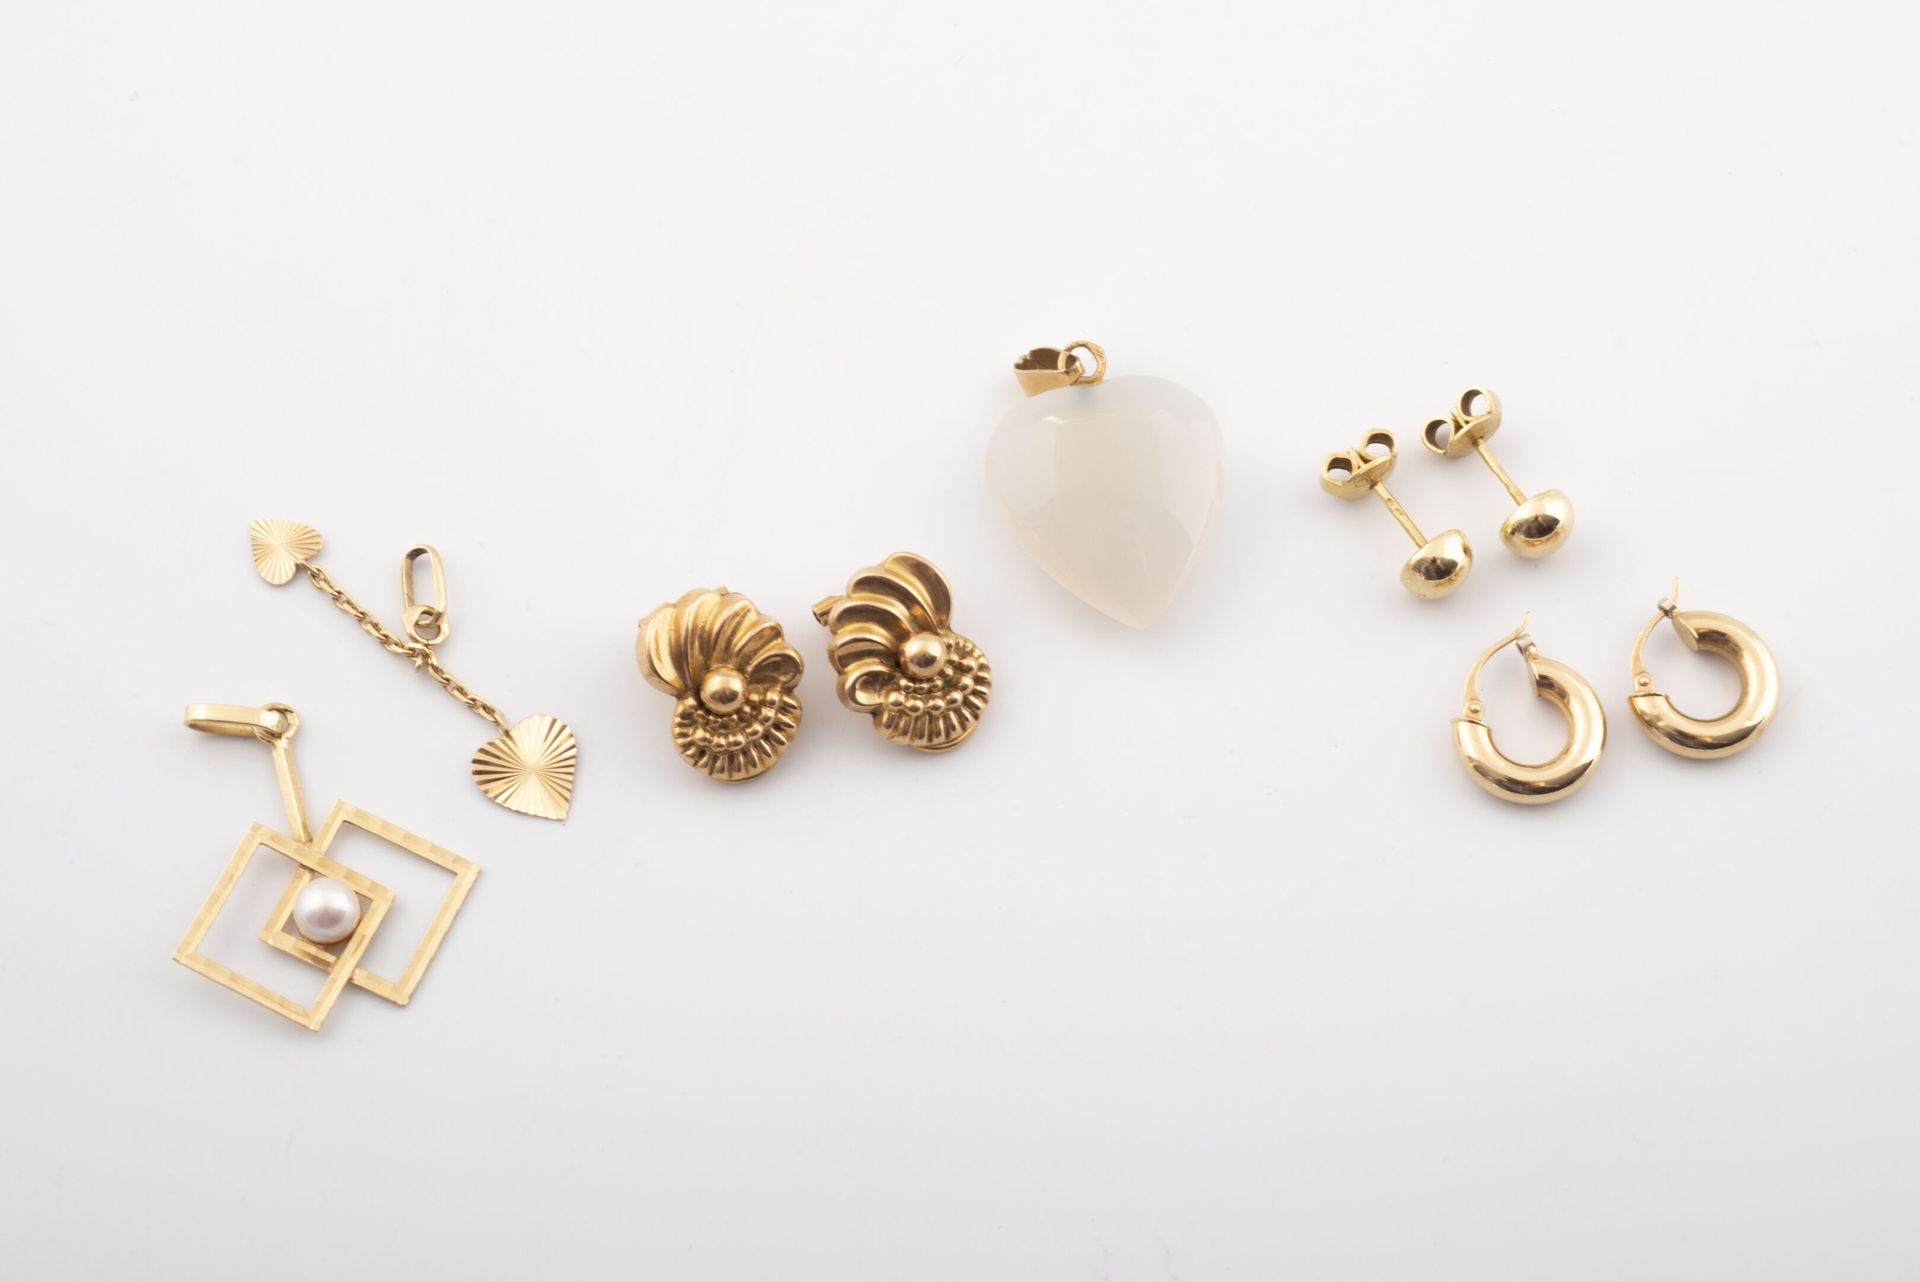 Lot de bijoux en or jaune (750) comprenant : - Par de criollas de oro (750).

- &hellip;